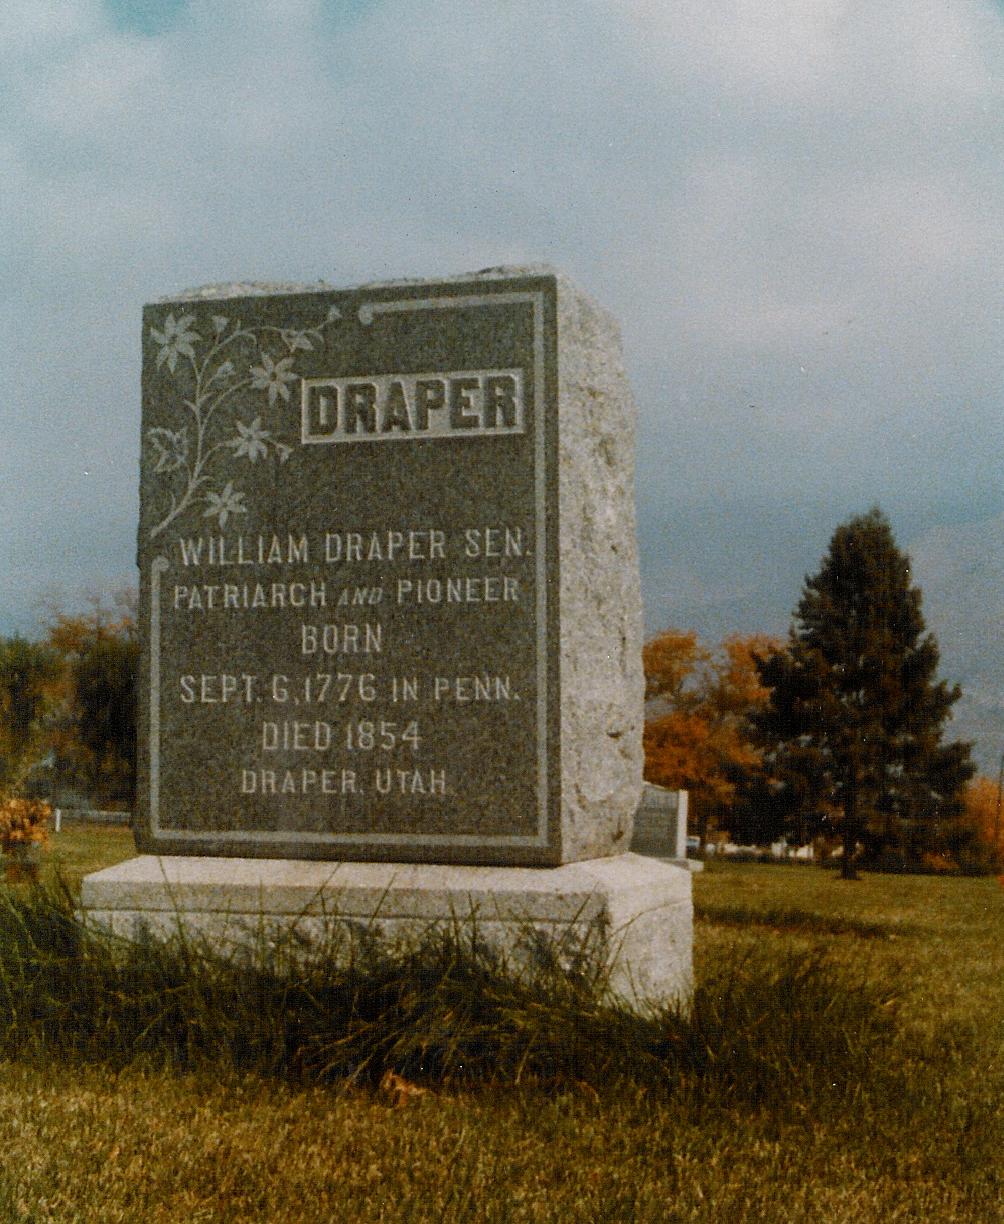 William Draper Senior Tombstone - Incorrect Birthdate